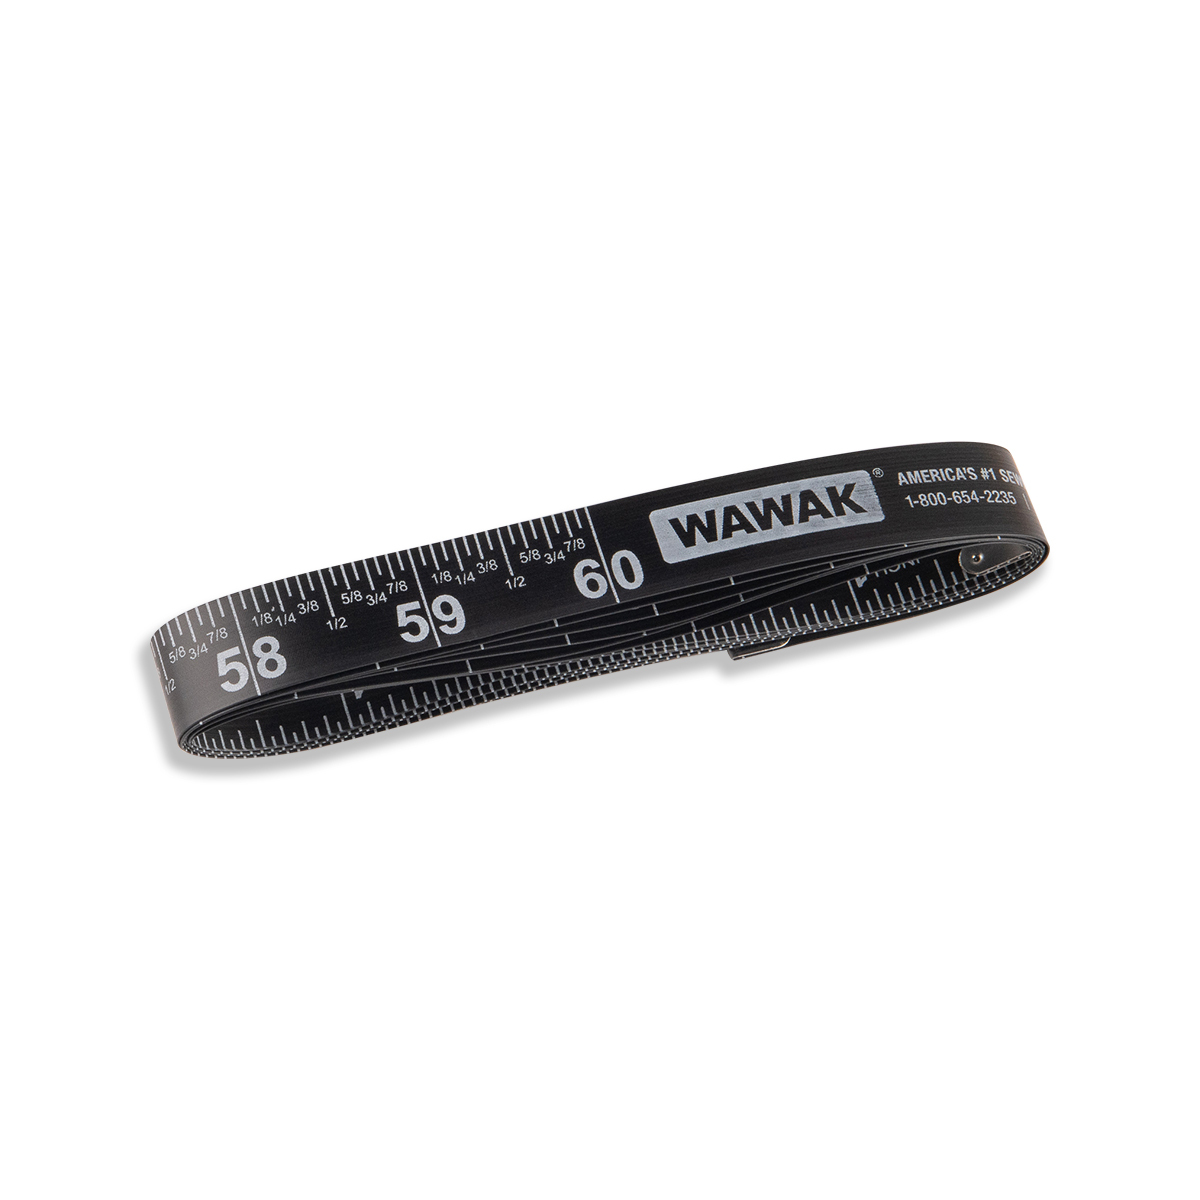 Pocket seamstress tape measure, Inch and Cm - Maison Le Glazik